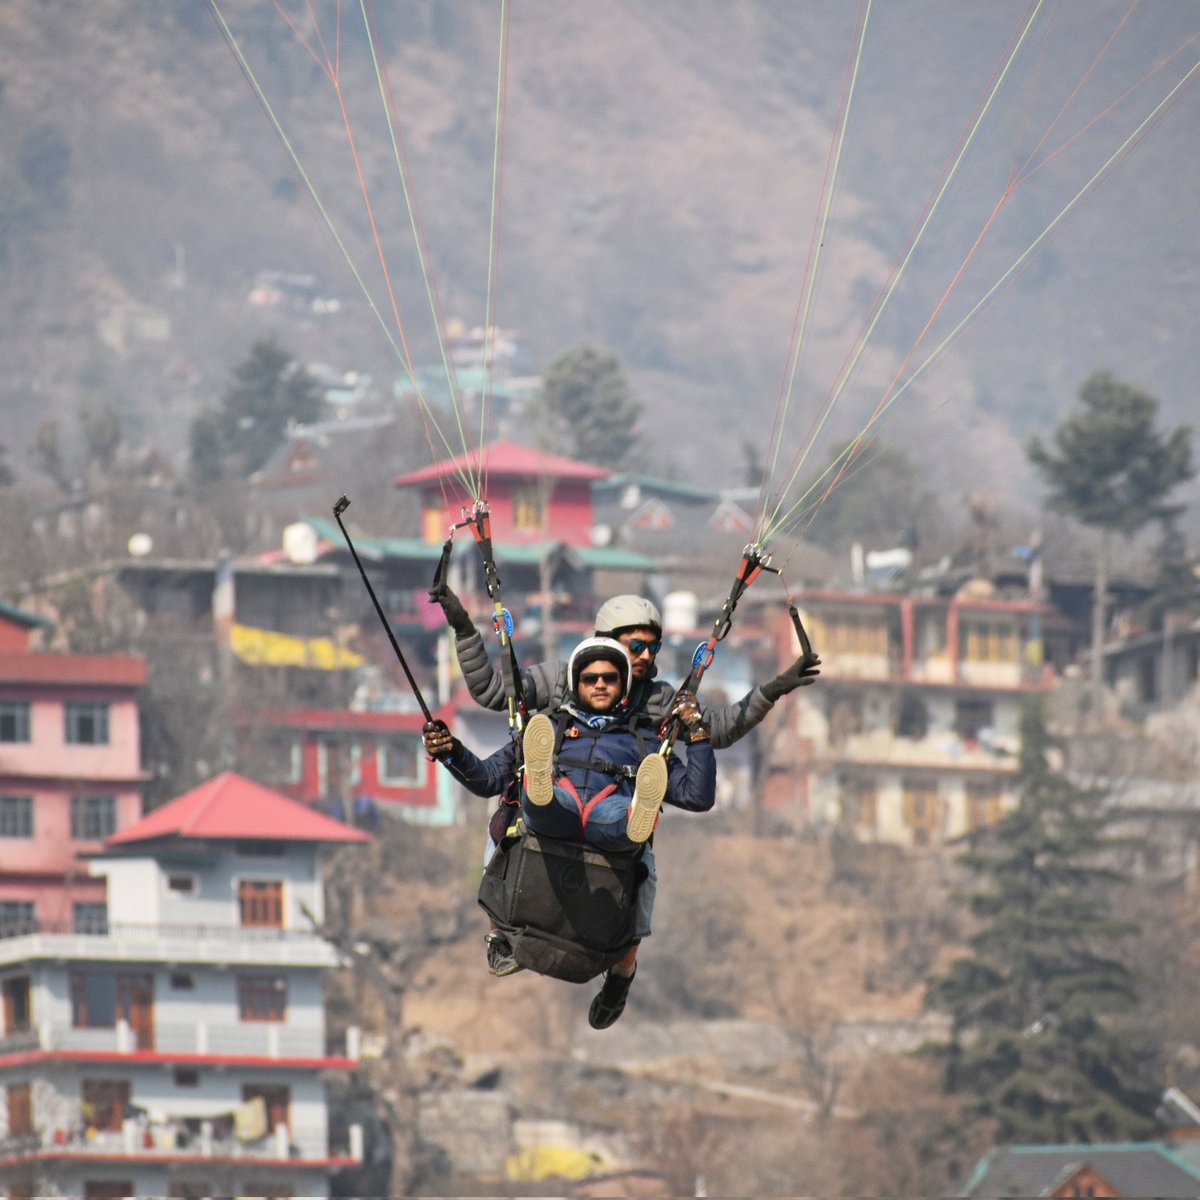 ଟିକେ ଉଡ଼ି ଆସିଲି ଆଉ #Manali❤️ #HimachalPradesh #Himachal #manali #manalidiaries #paragliding #follower @highlight